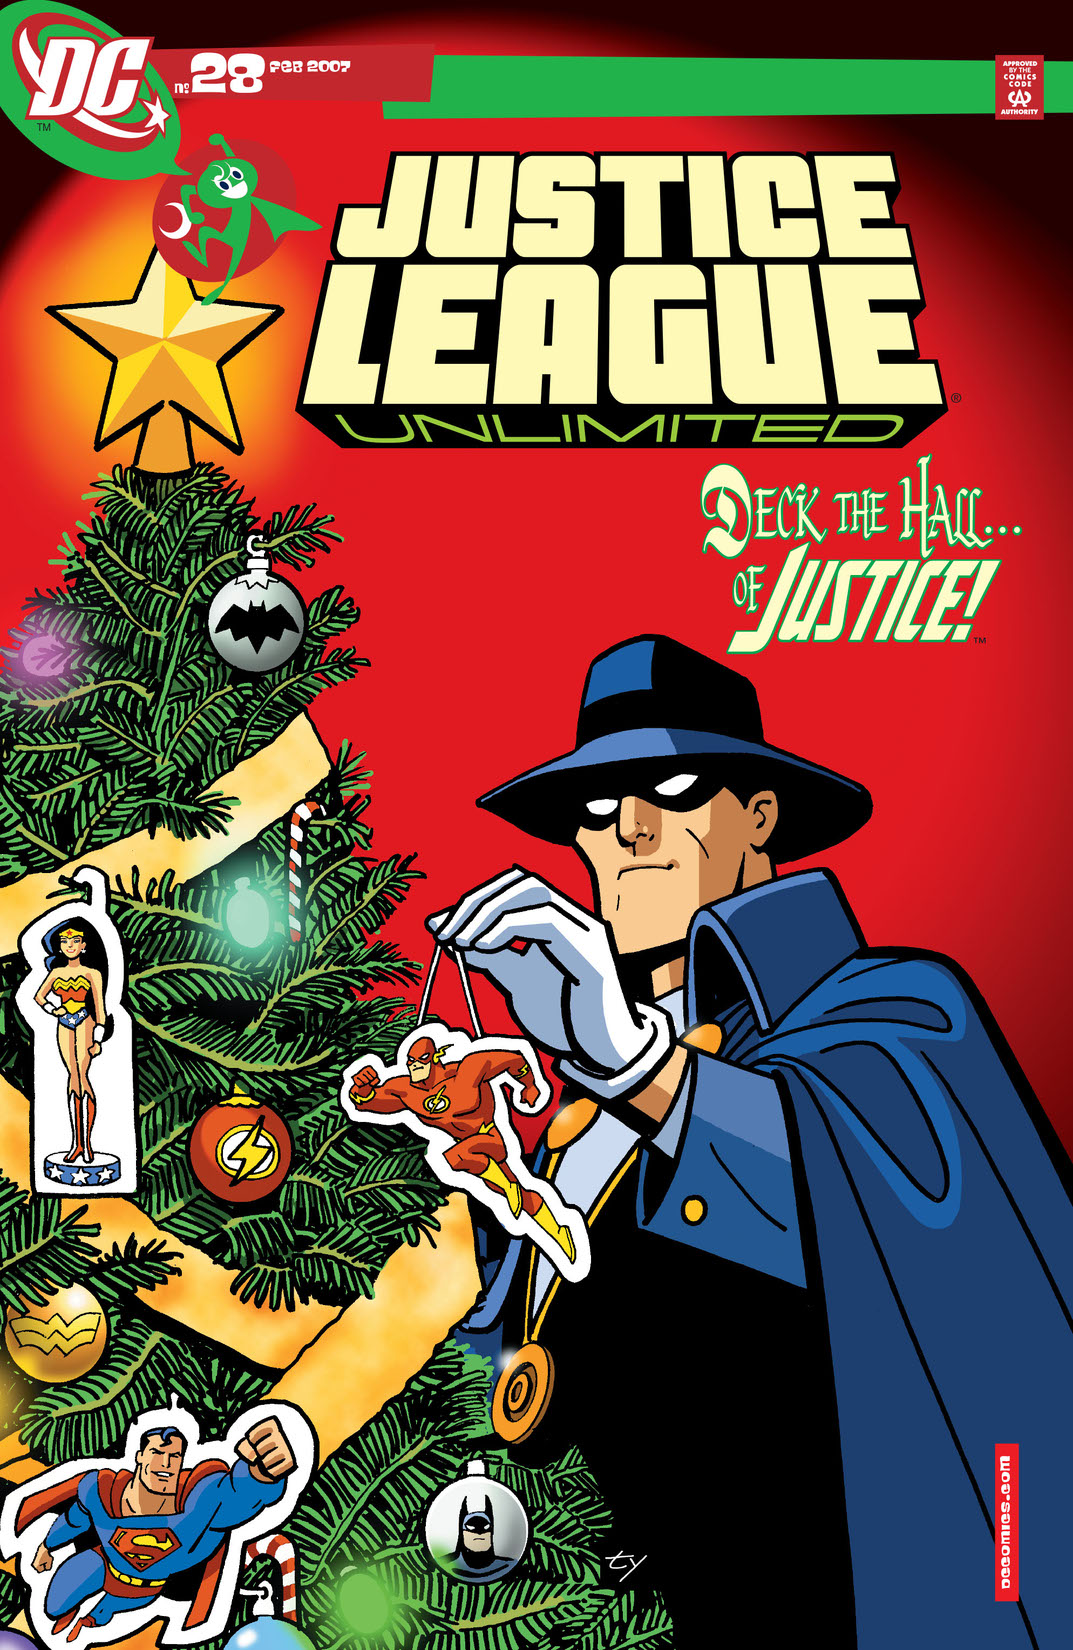 Justice League Unlimited #28 preview images